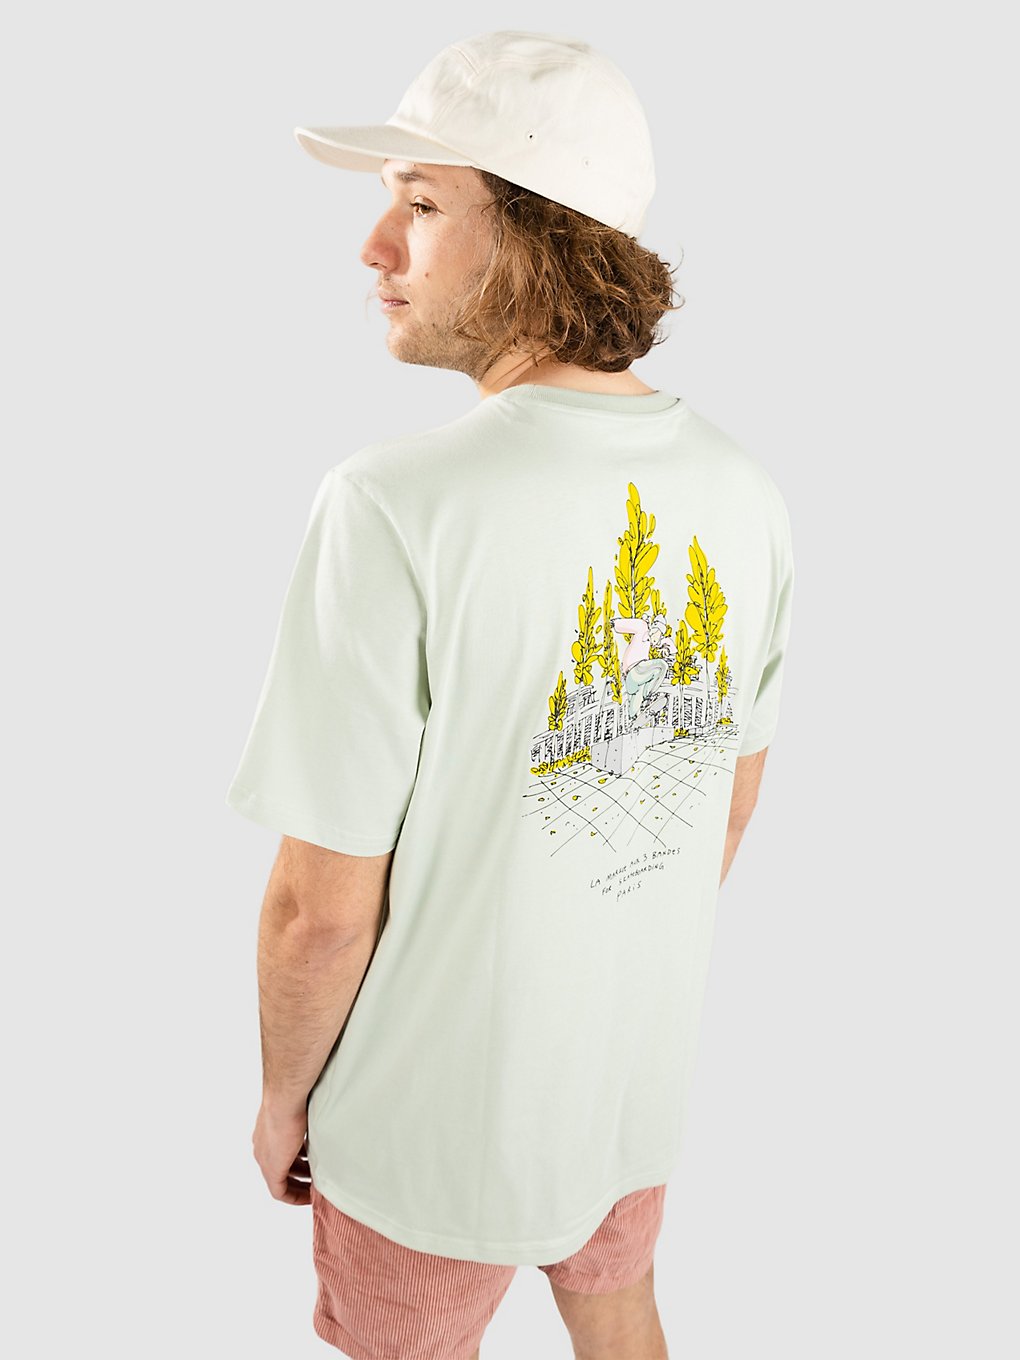 adidas Skateboarding H Jones T-Shirt multco kaufen